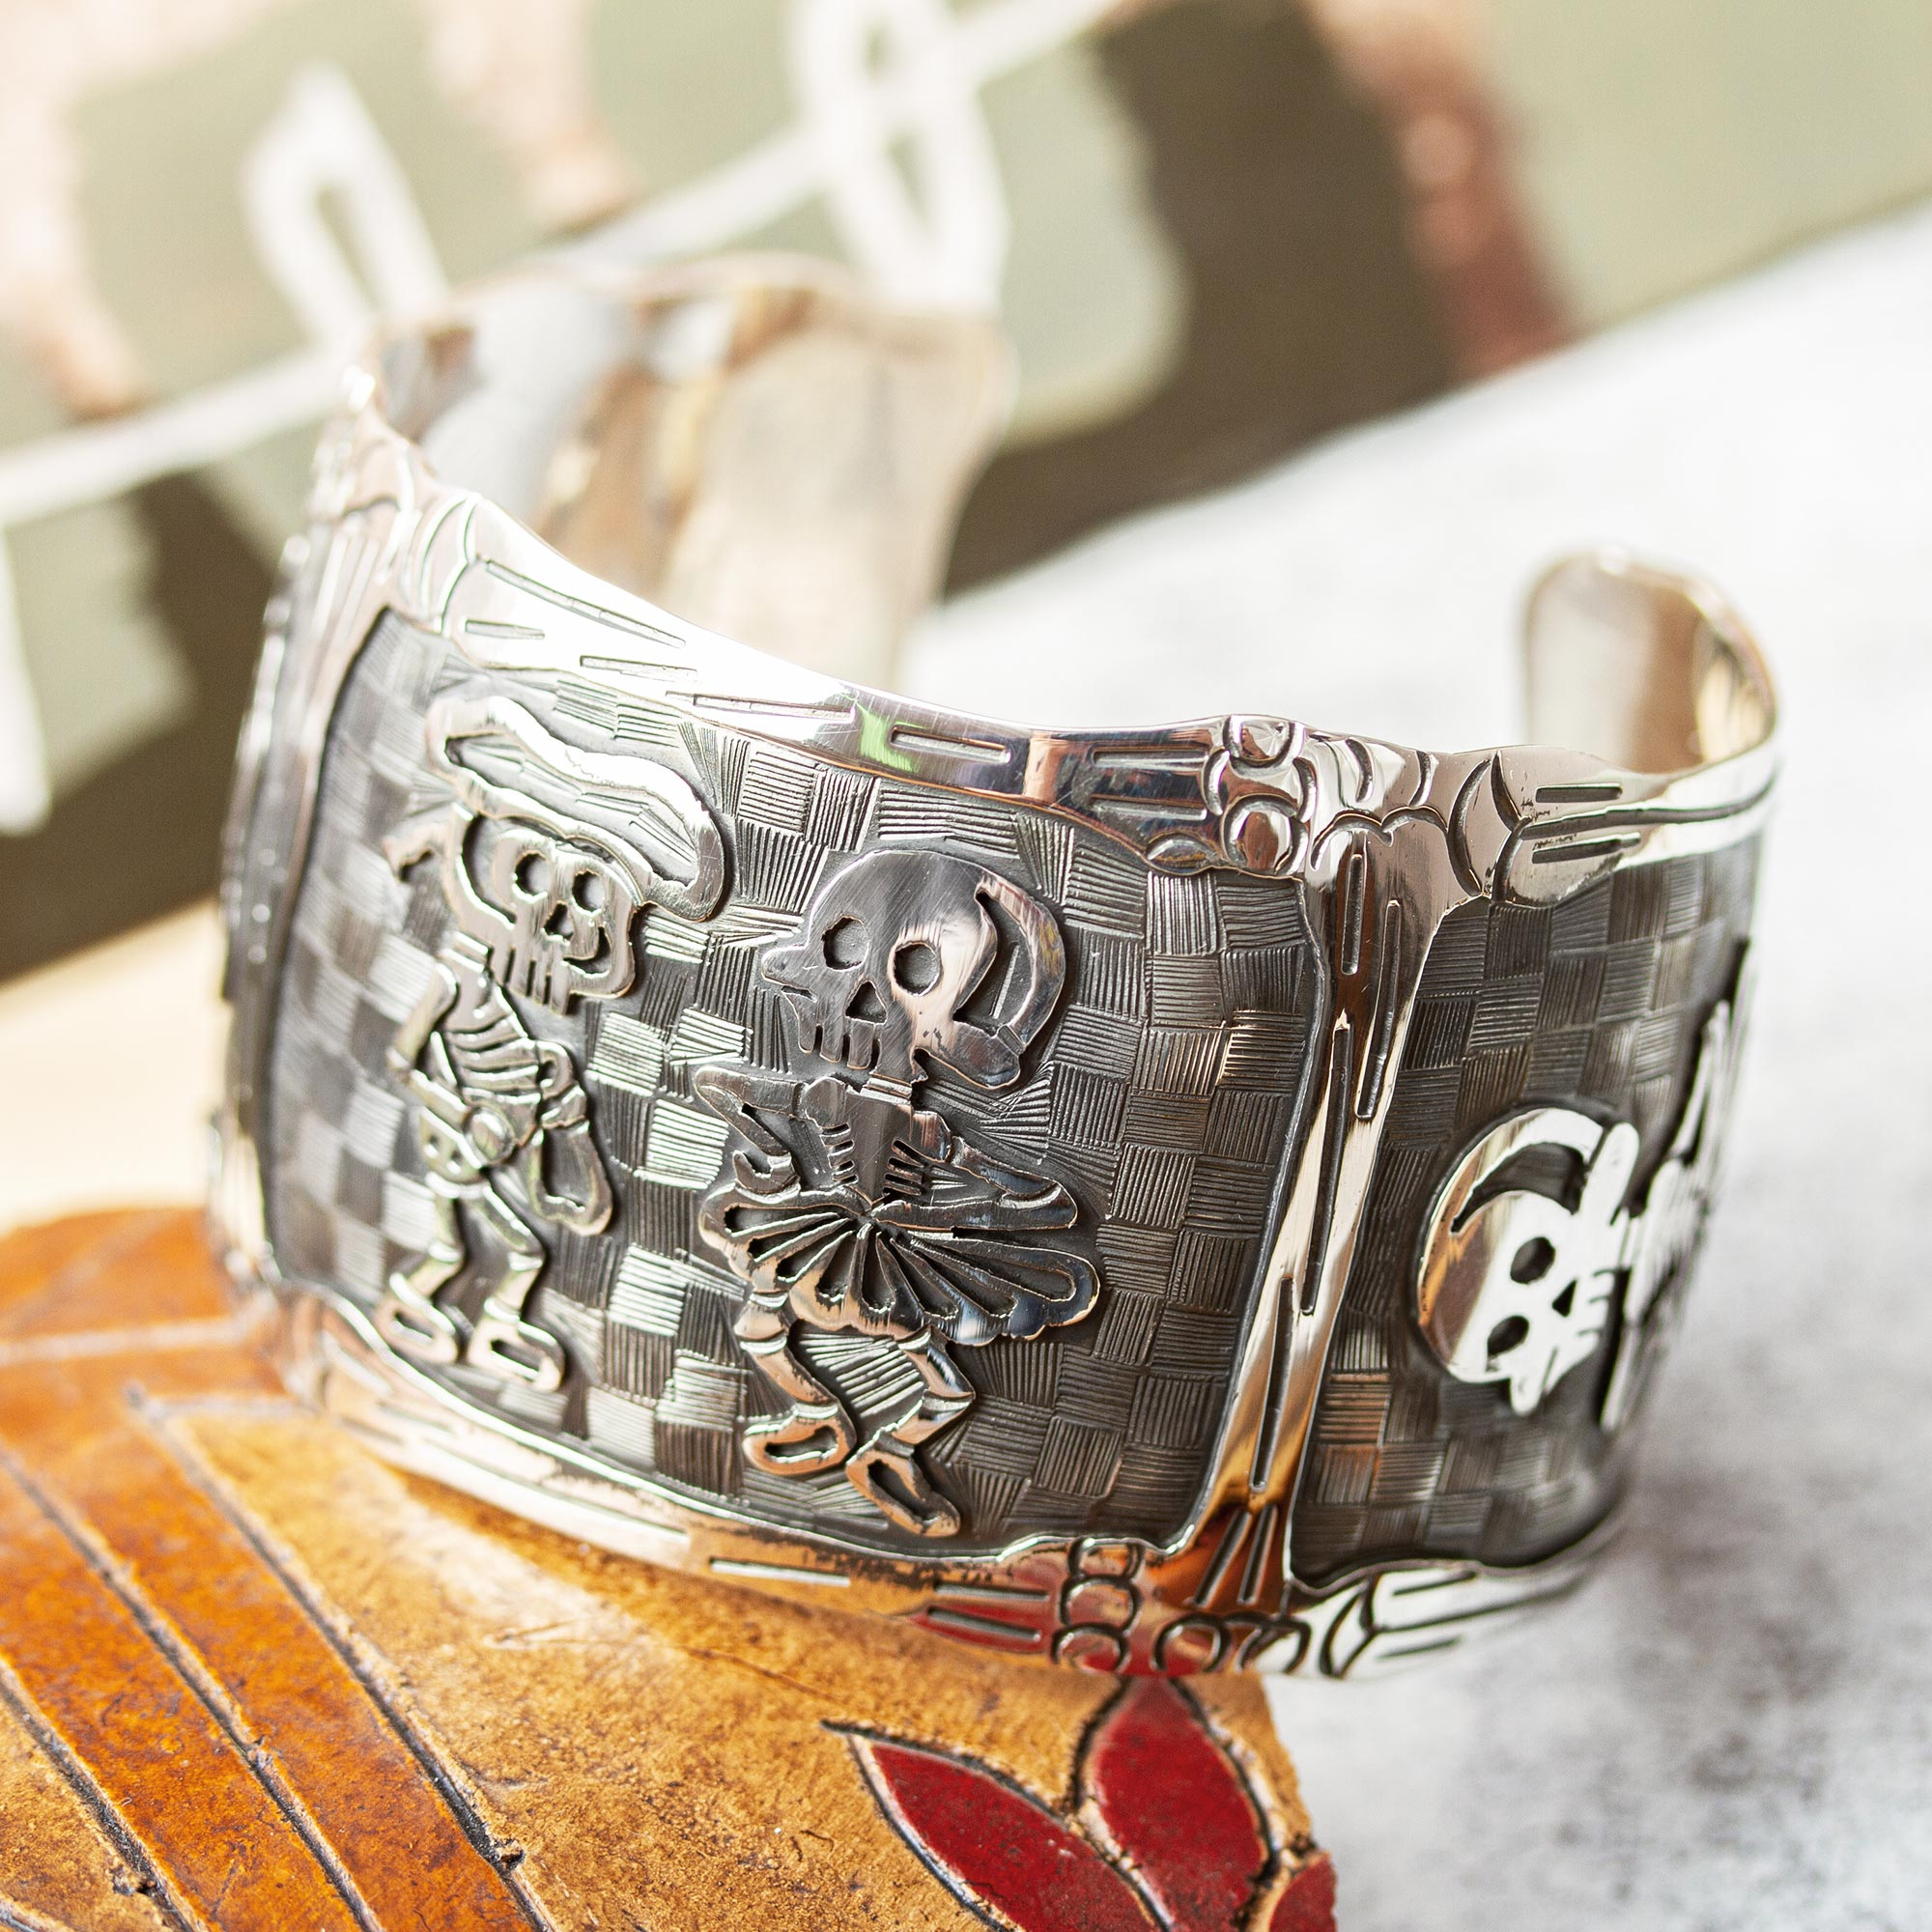 Unique Taxco Oxidized Silver Cuff Bracelet